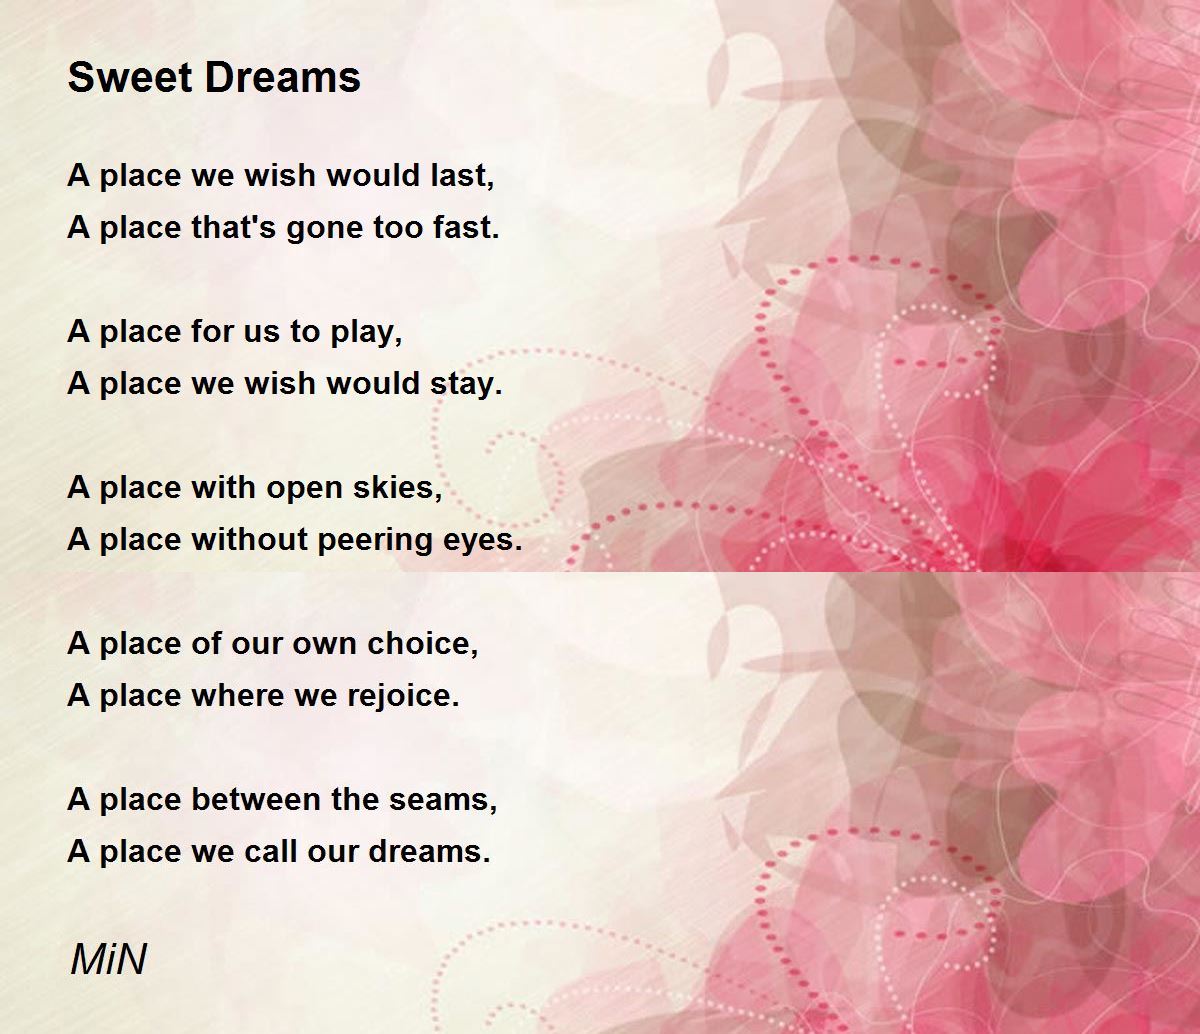 Sweet Dreams - Sweet Dreams Poem by MiN